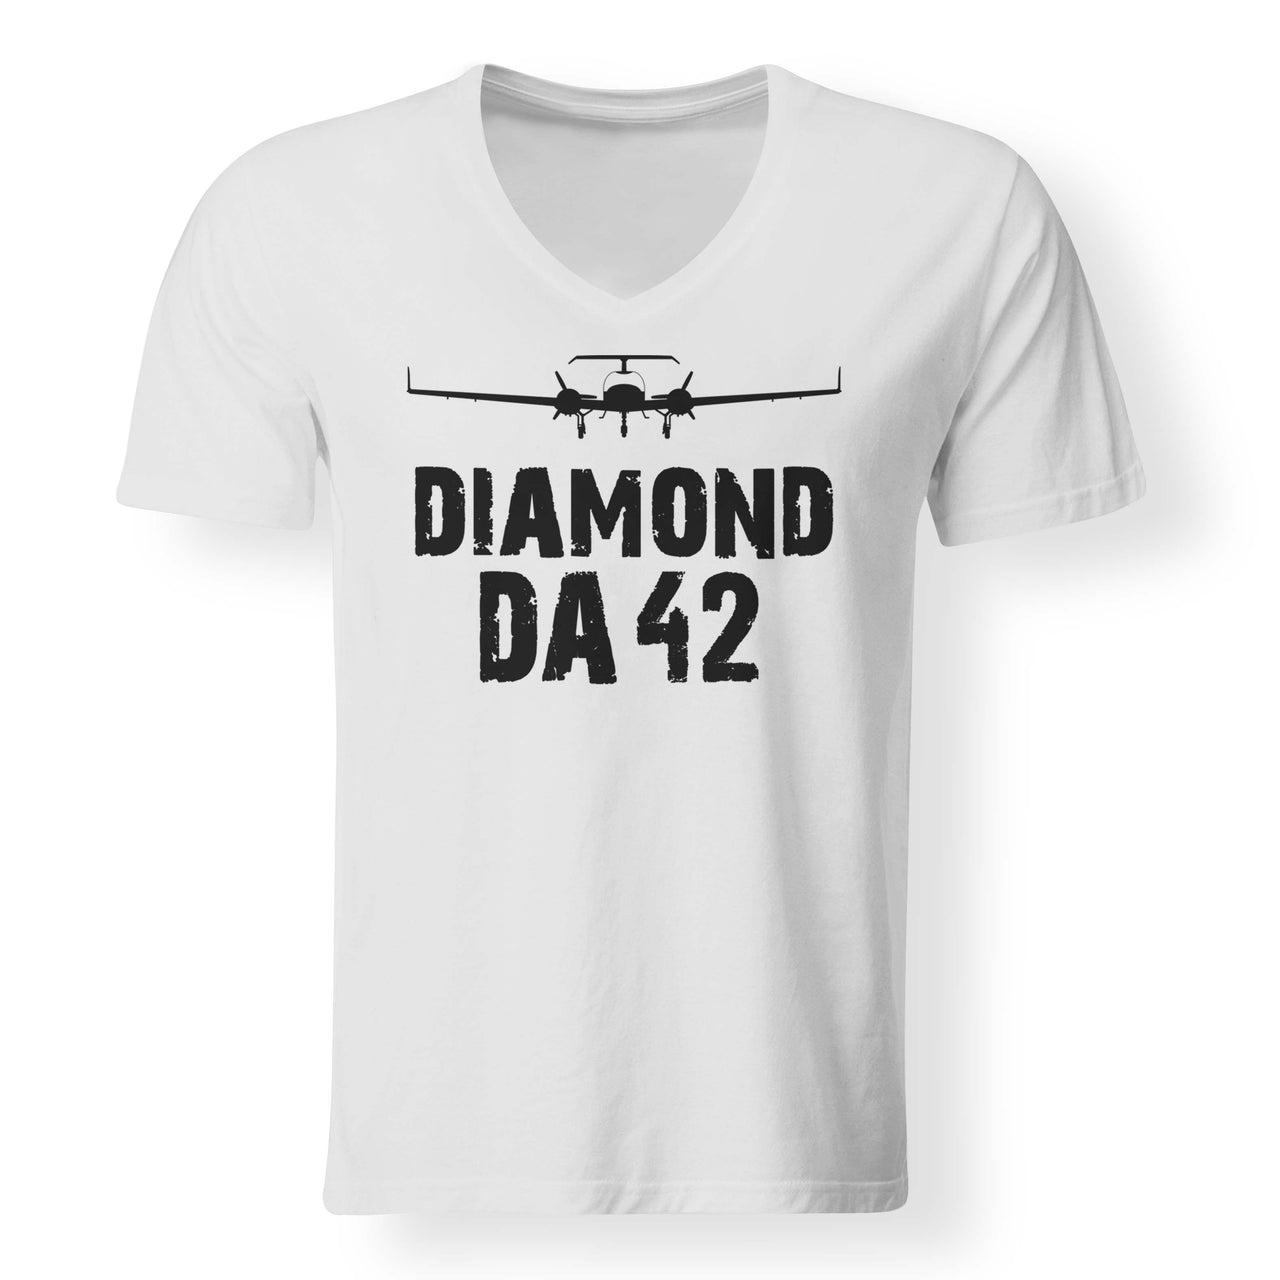 Diamond DA42 & Plane Designed V-Neck T-Shirts